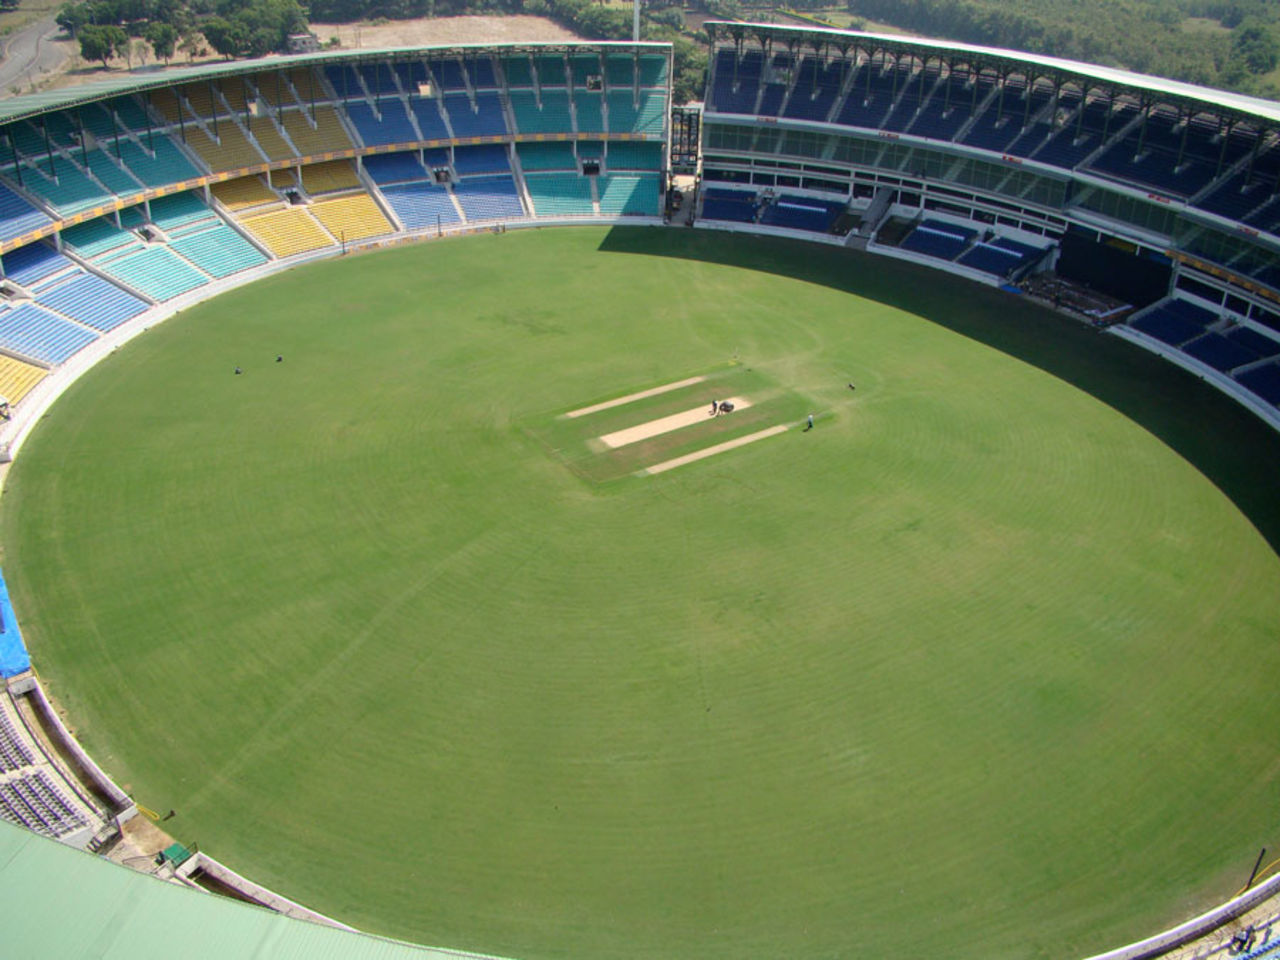 VCA Stadium Jamtha, in Nagpur